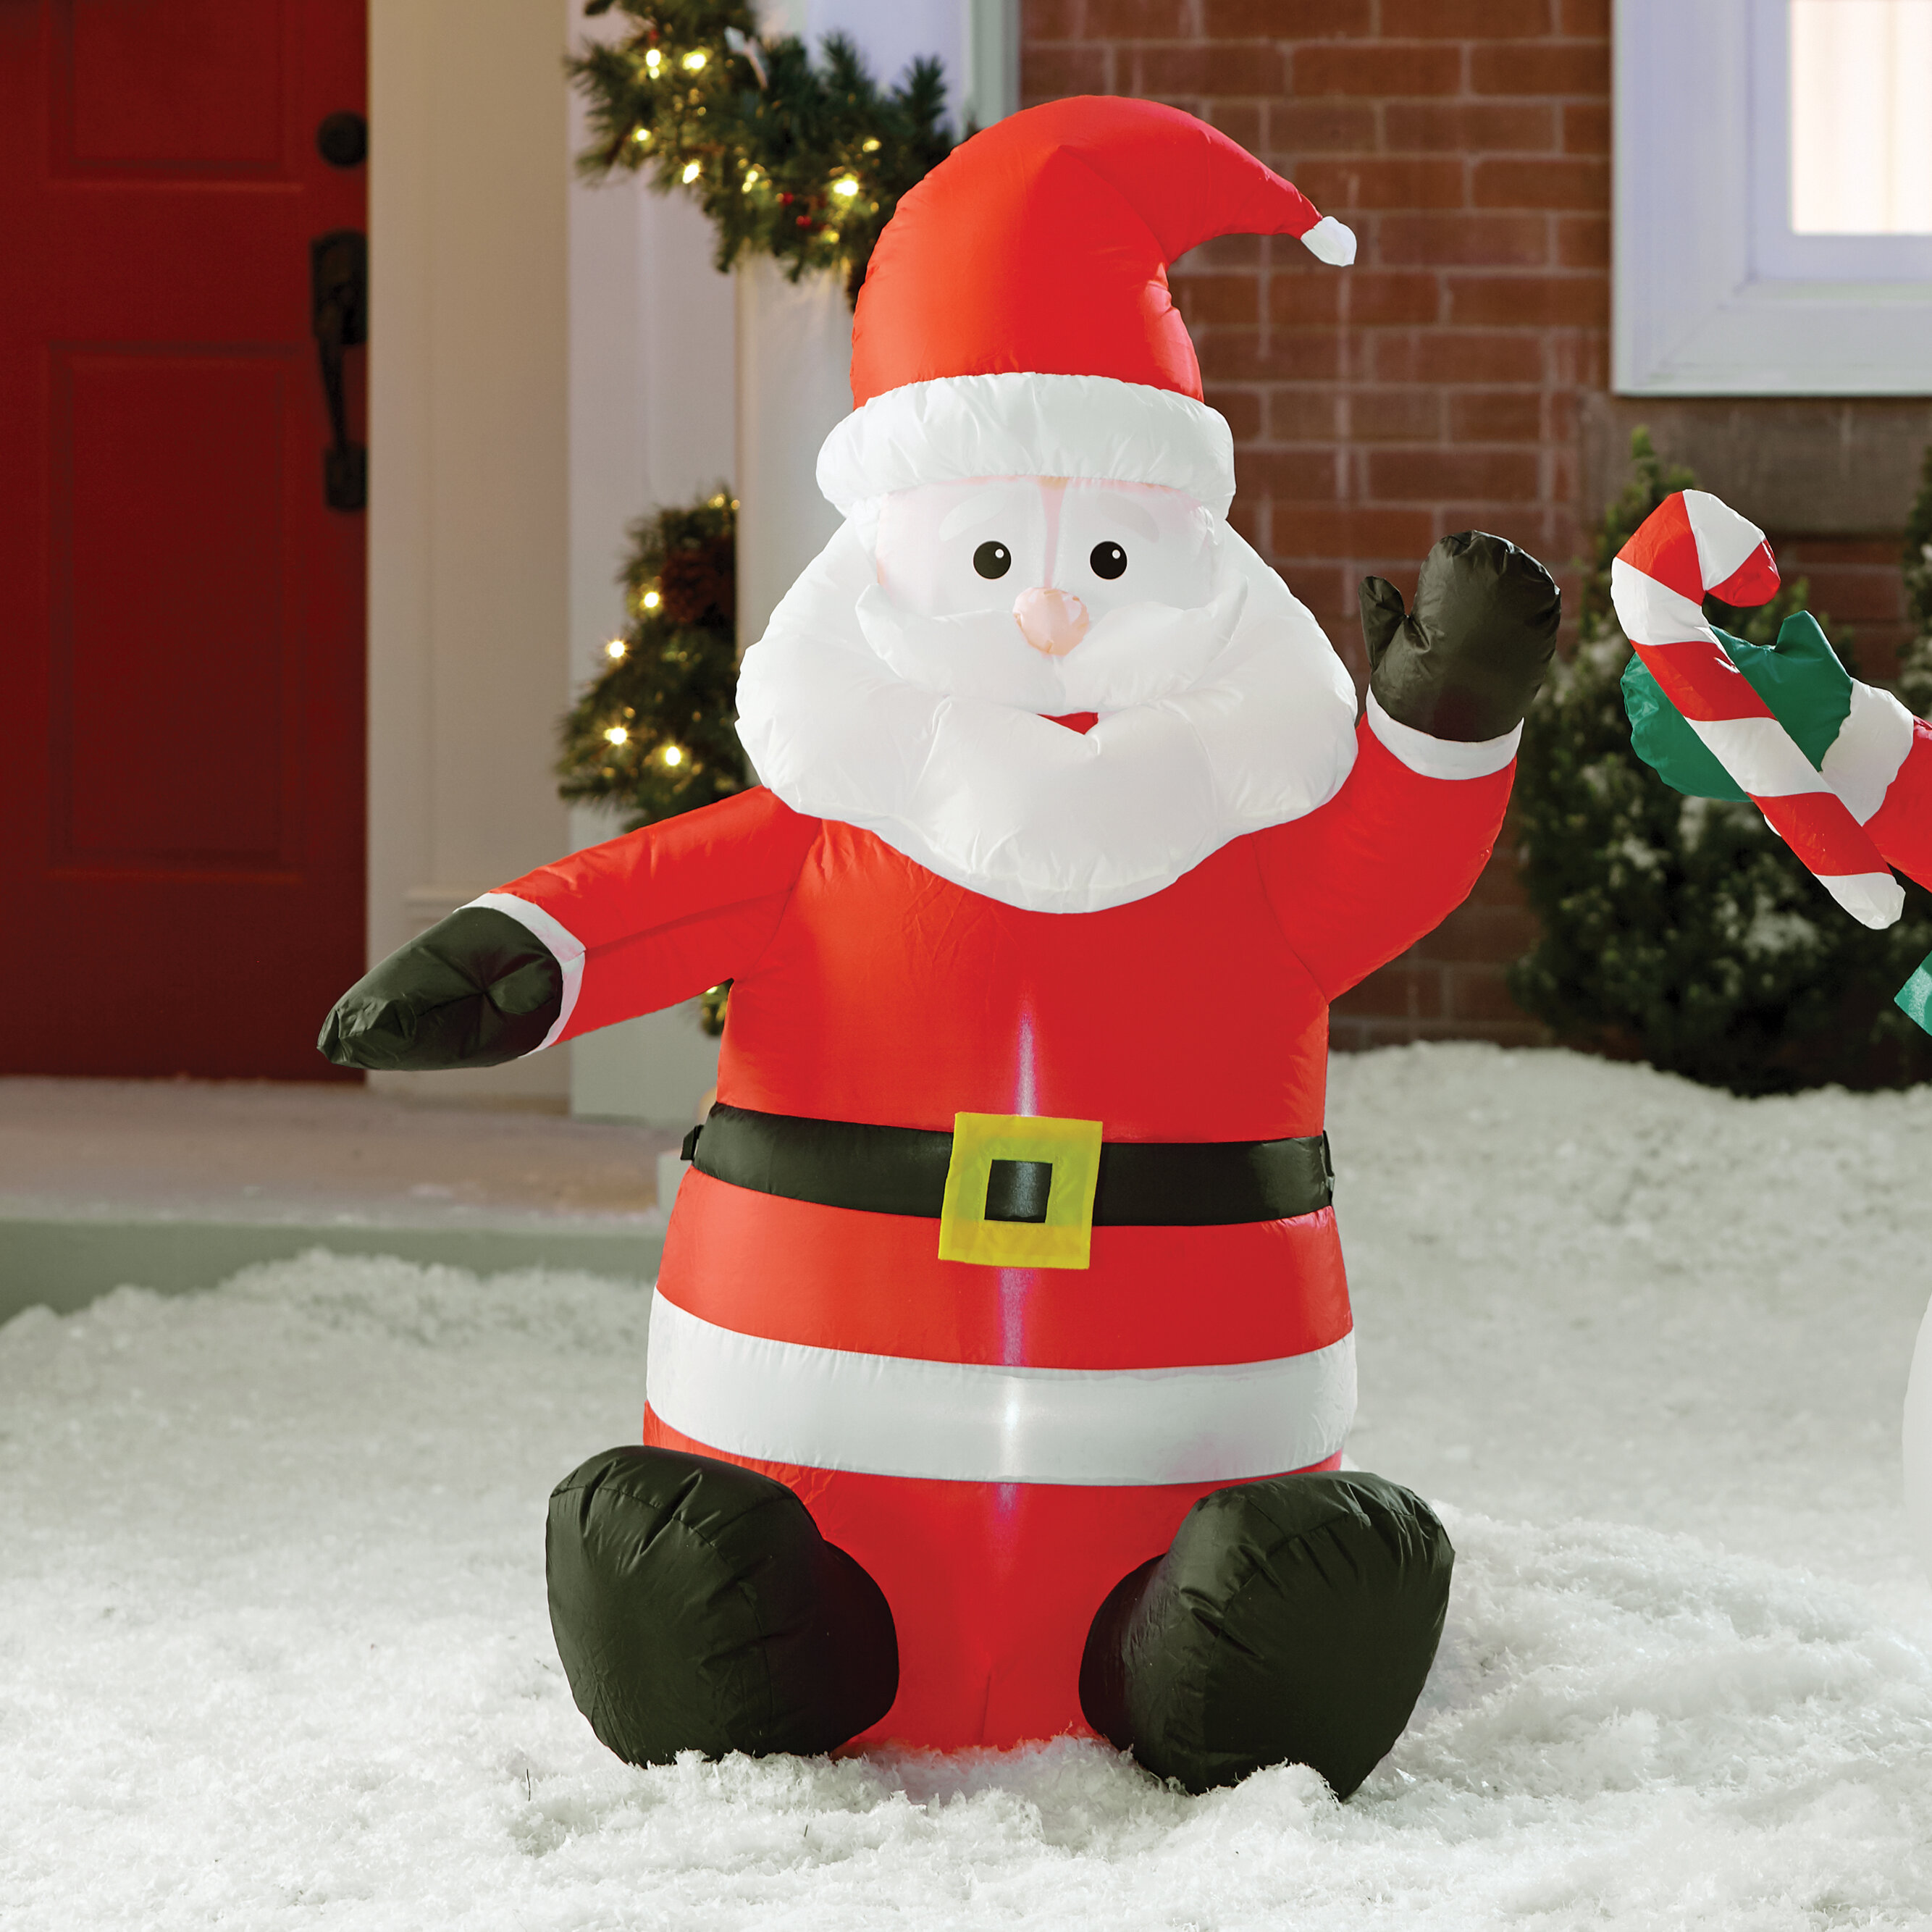 The Holiday Aisle Inflatable Santa Claus Decoration & Reviews | Wayfair